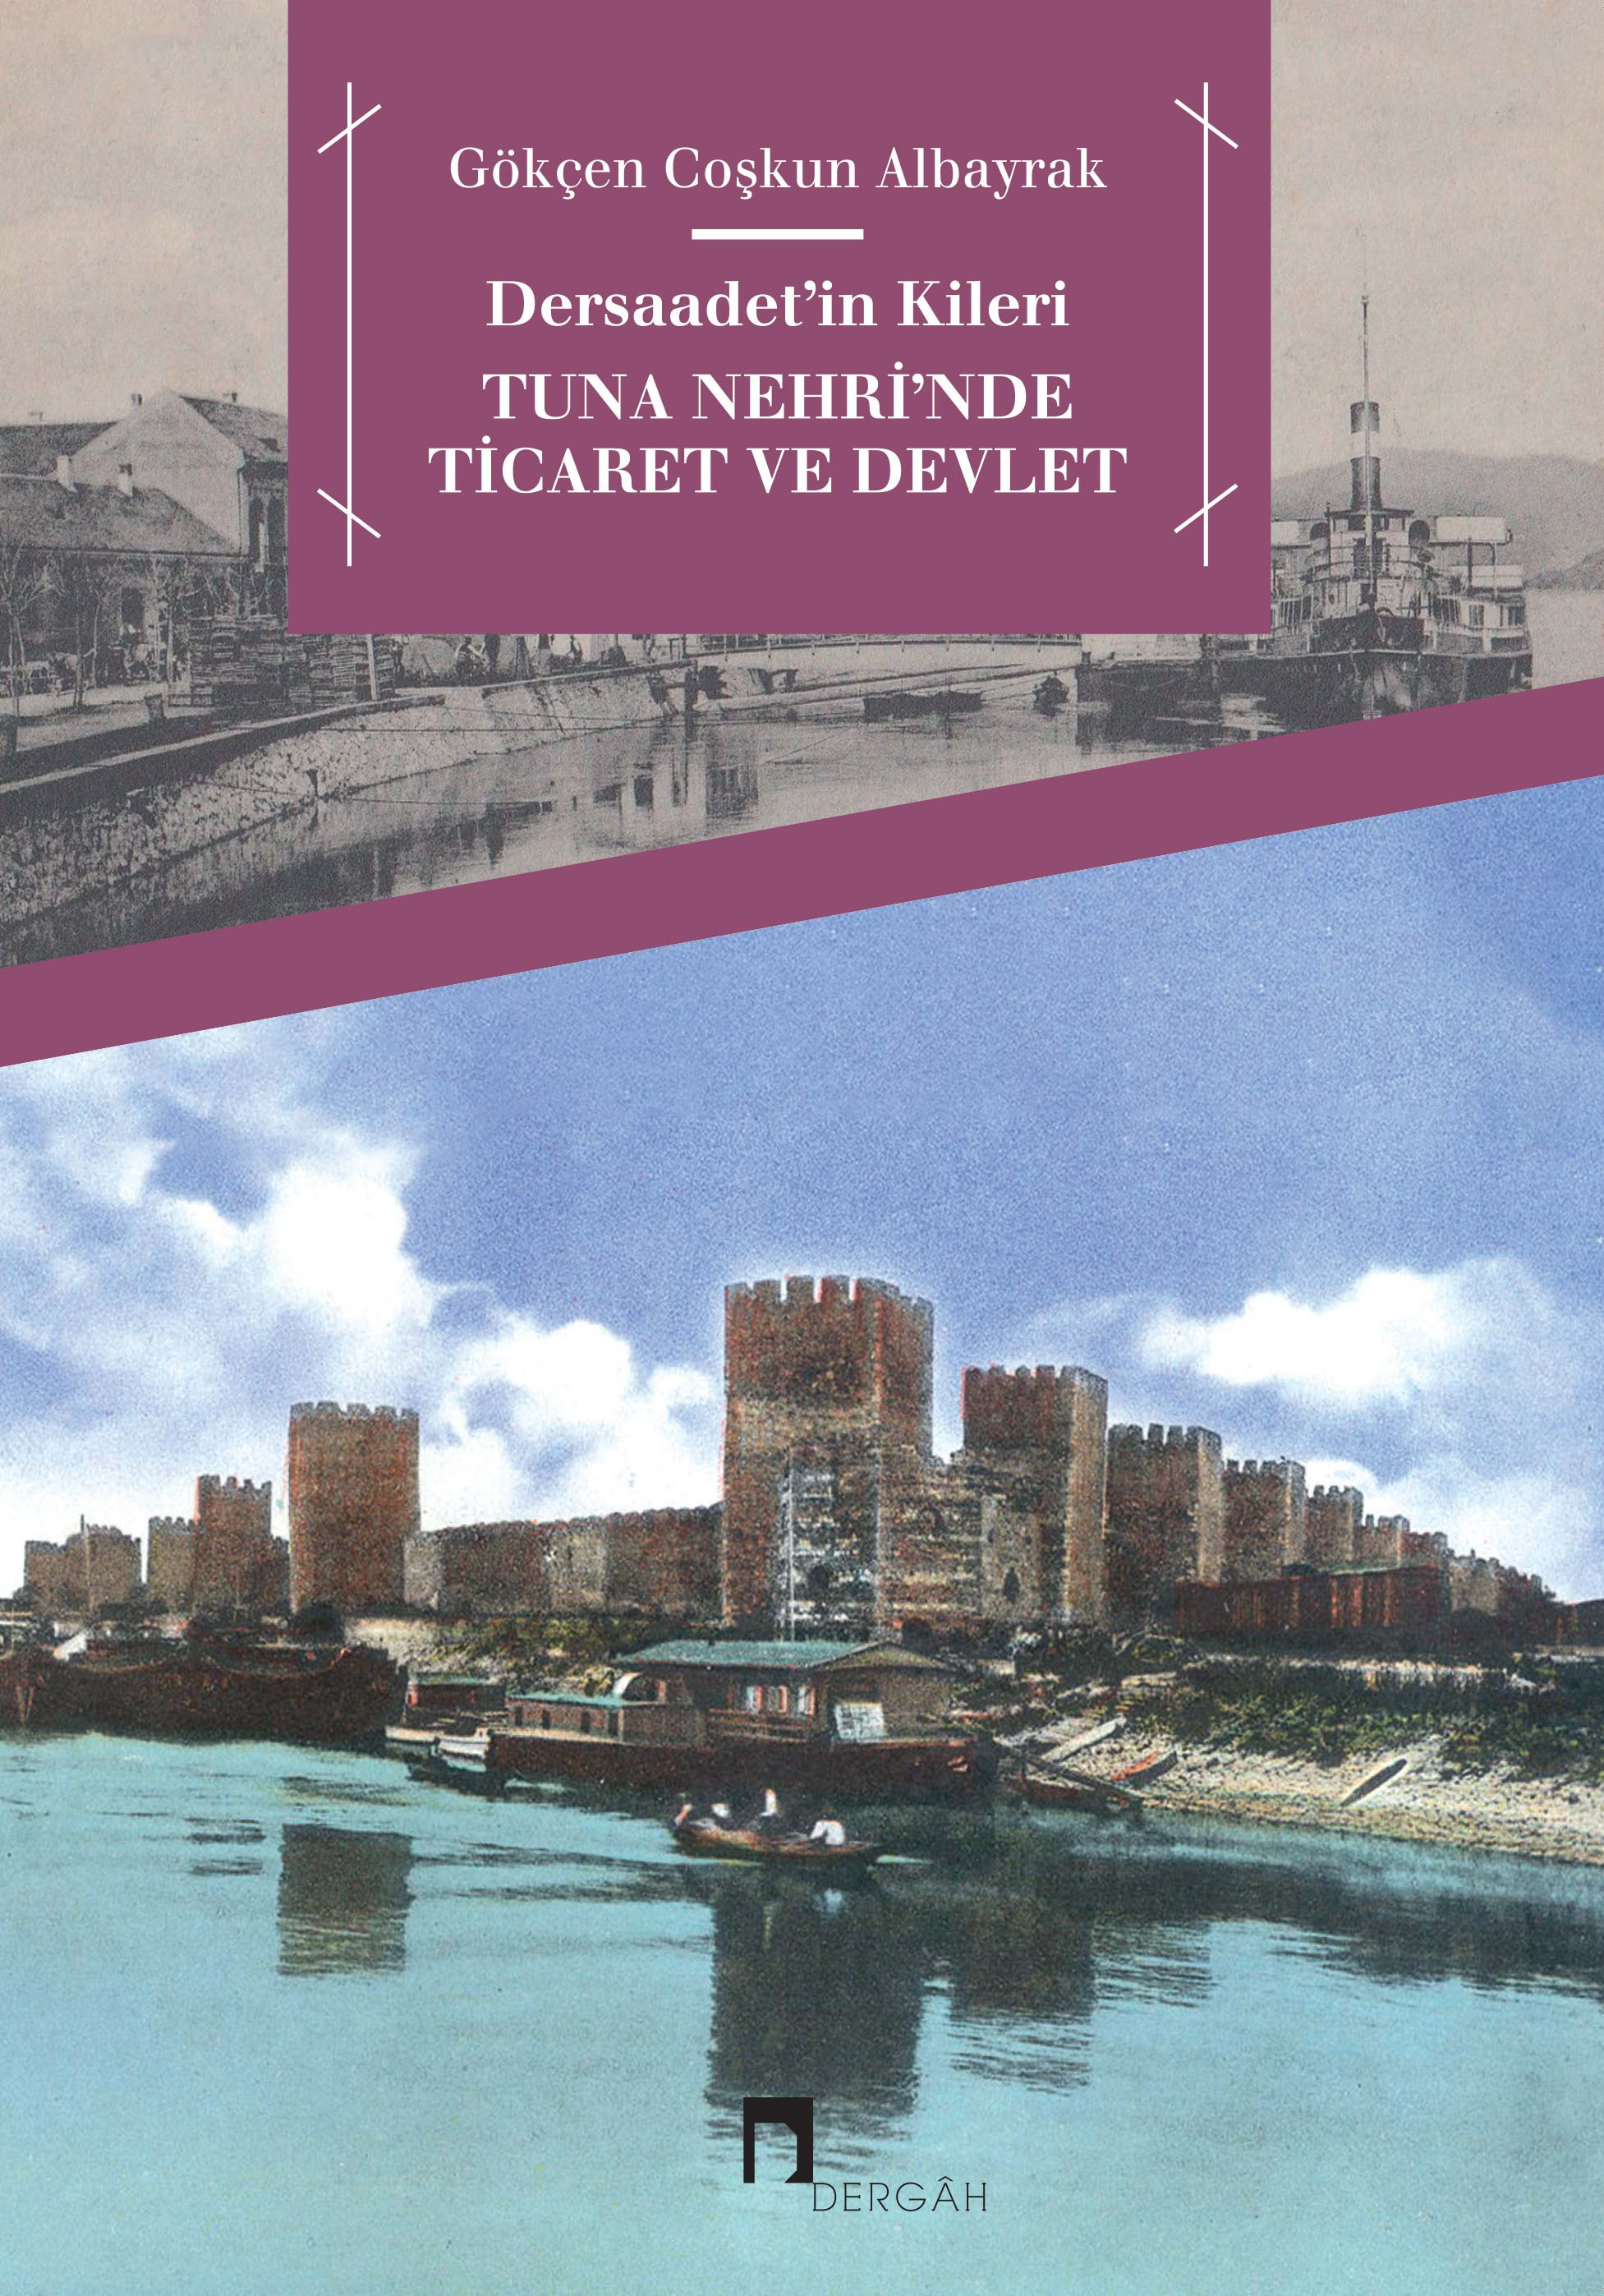 Dersaadet'in Kileri: Tuna Nehri'nde Ticaret ve Devlet